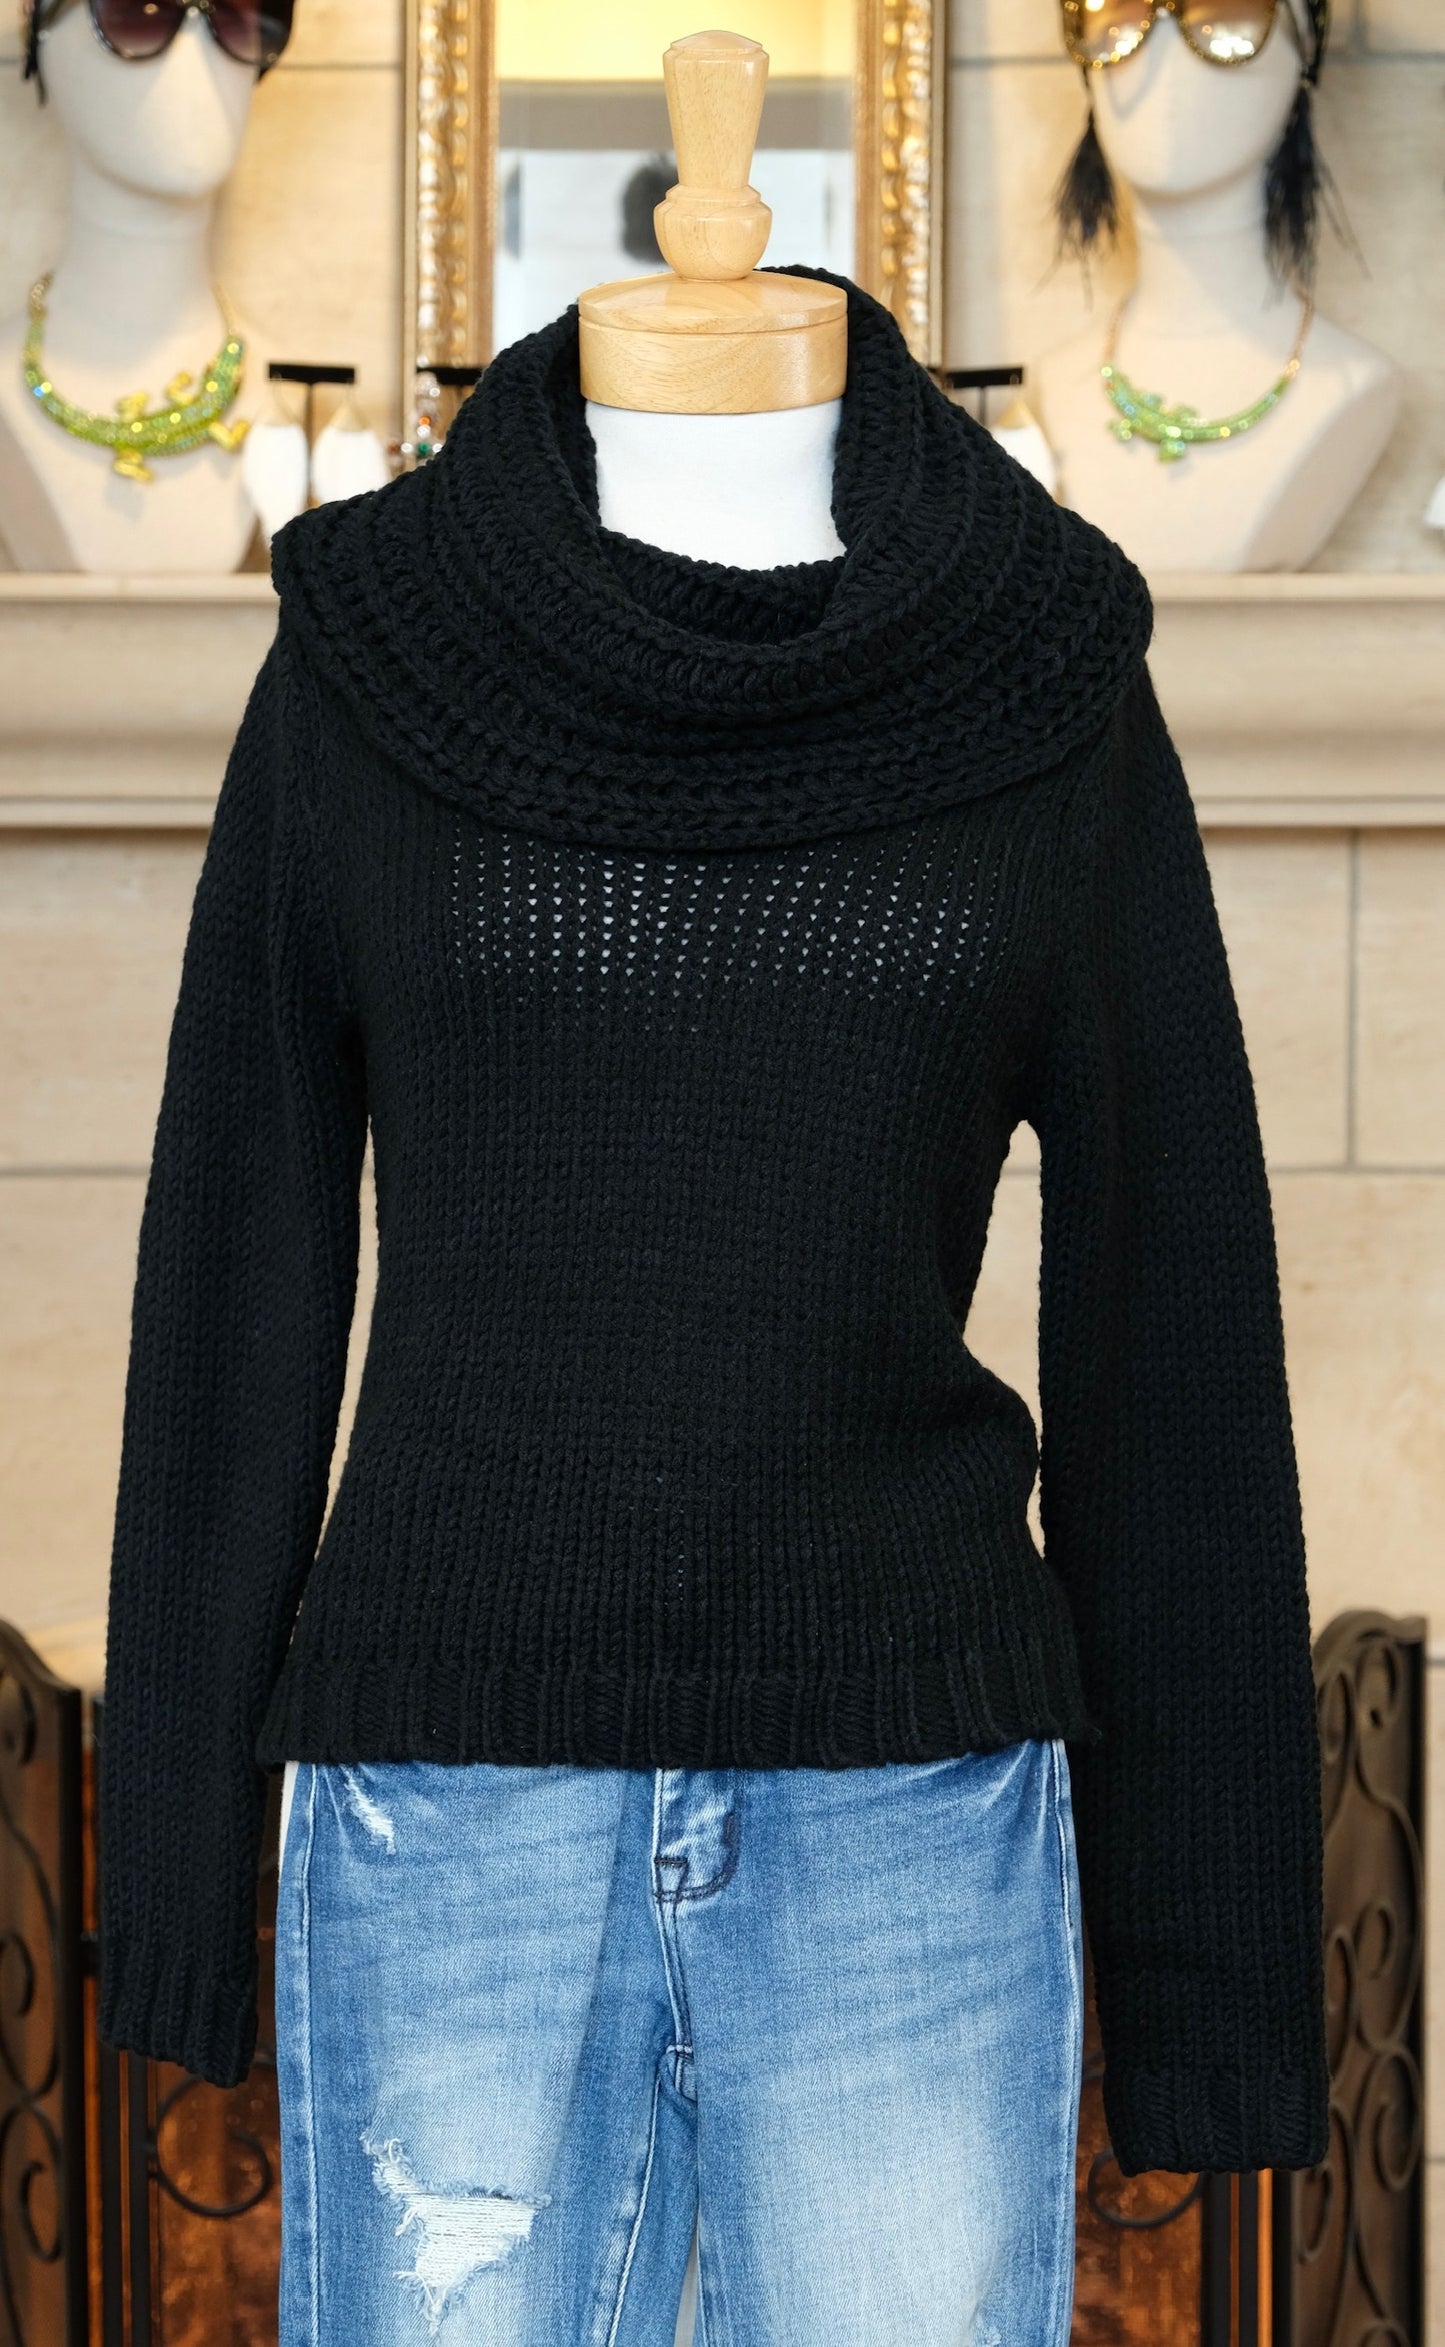 Inky Black Turtleneck Knit Sweater